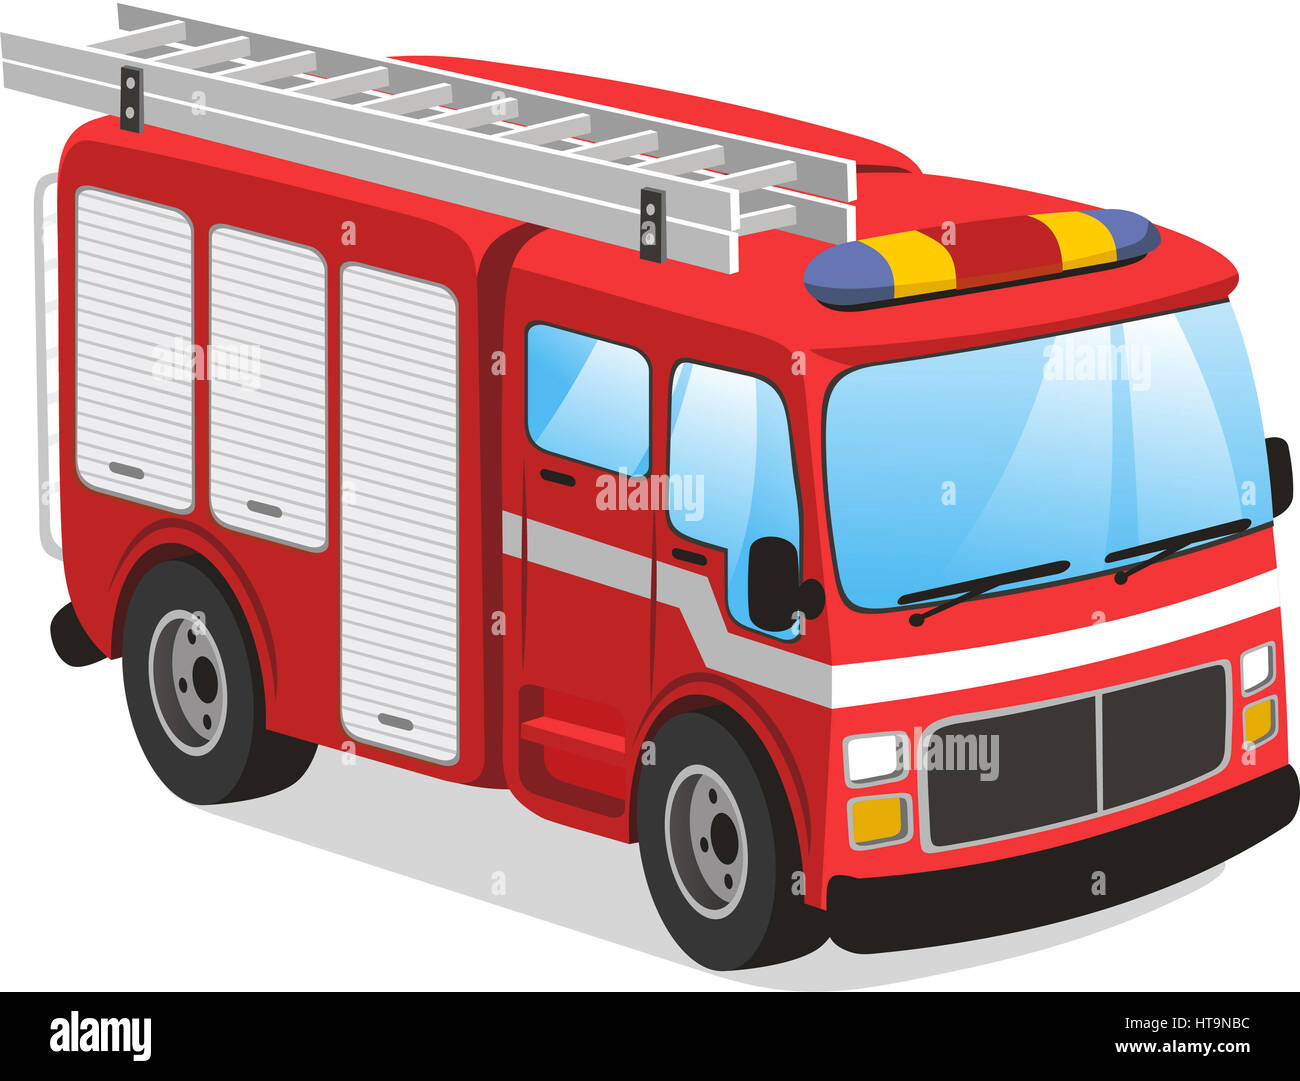 Fire truck cartoon illustration Stock Photo - Alamy